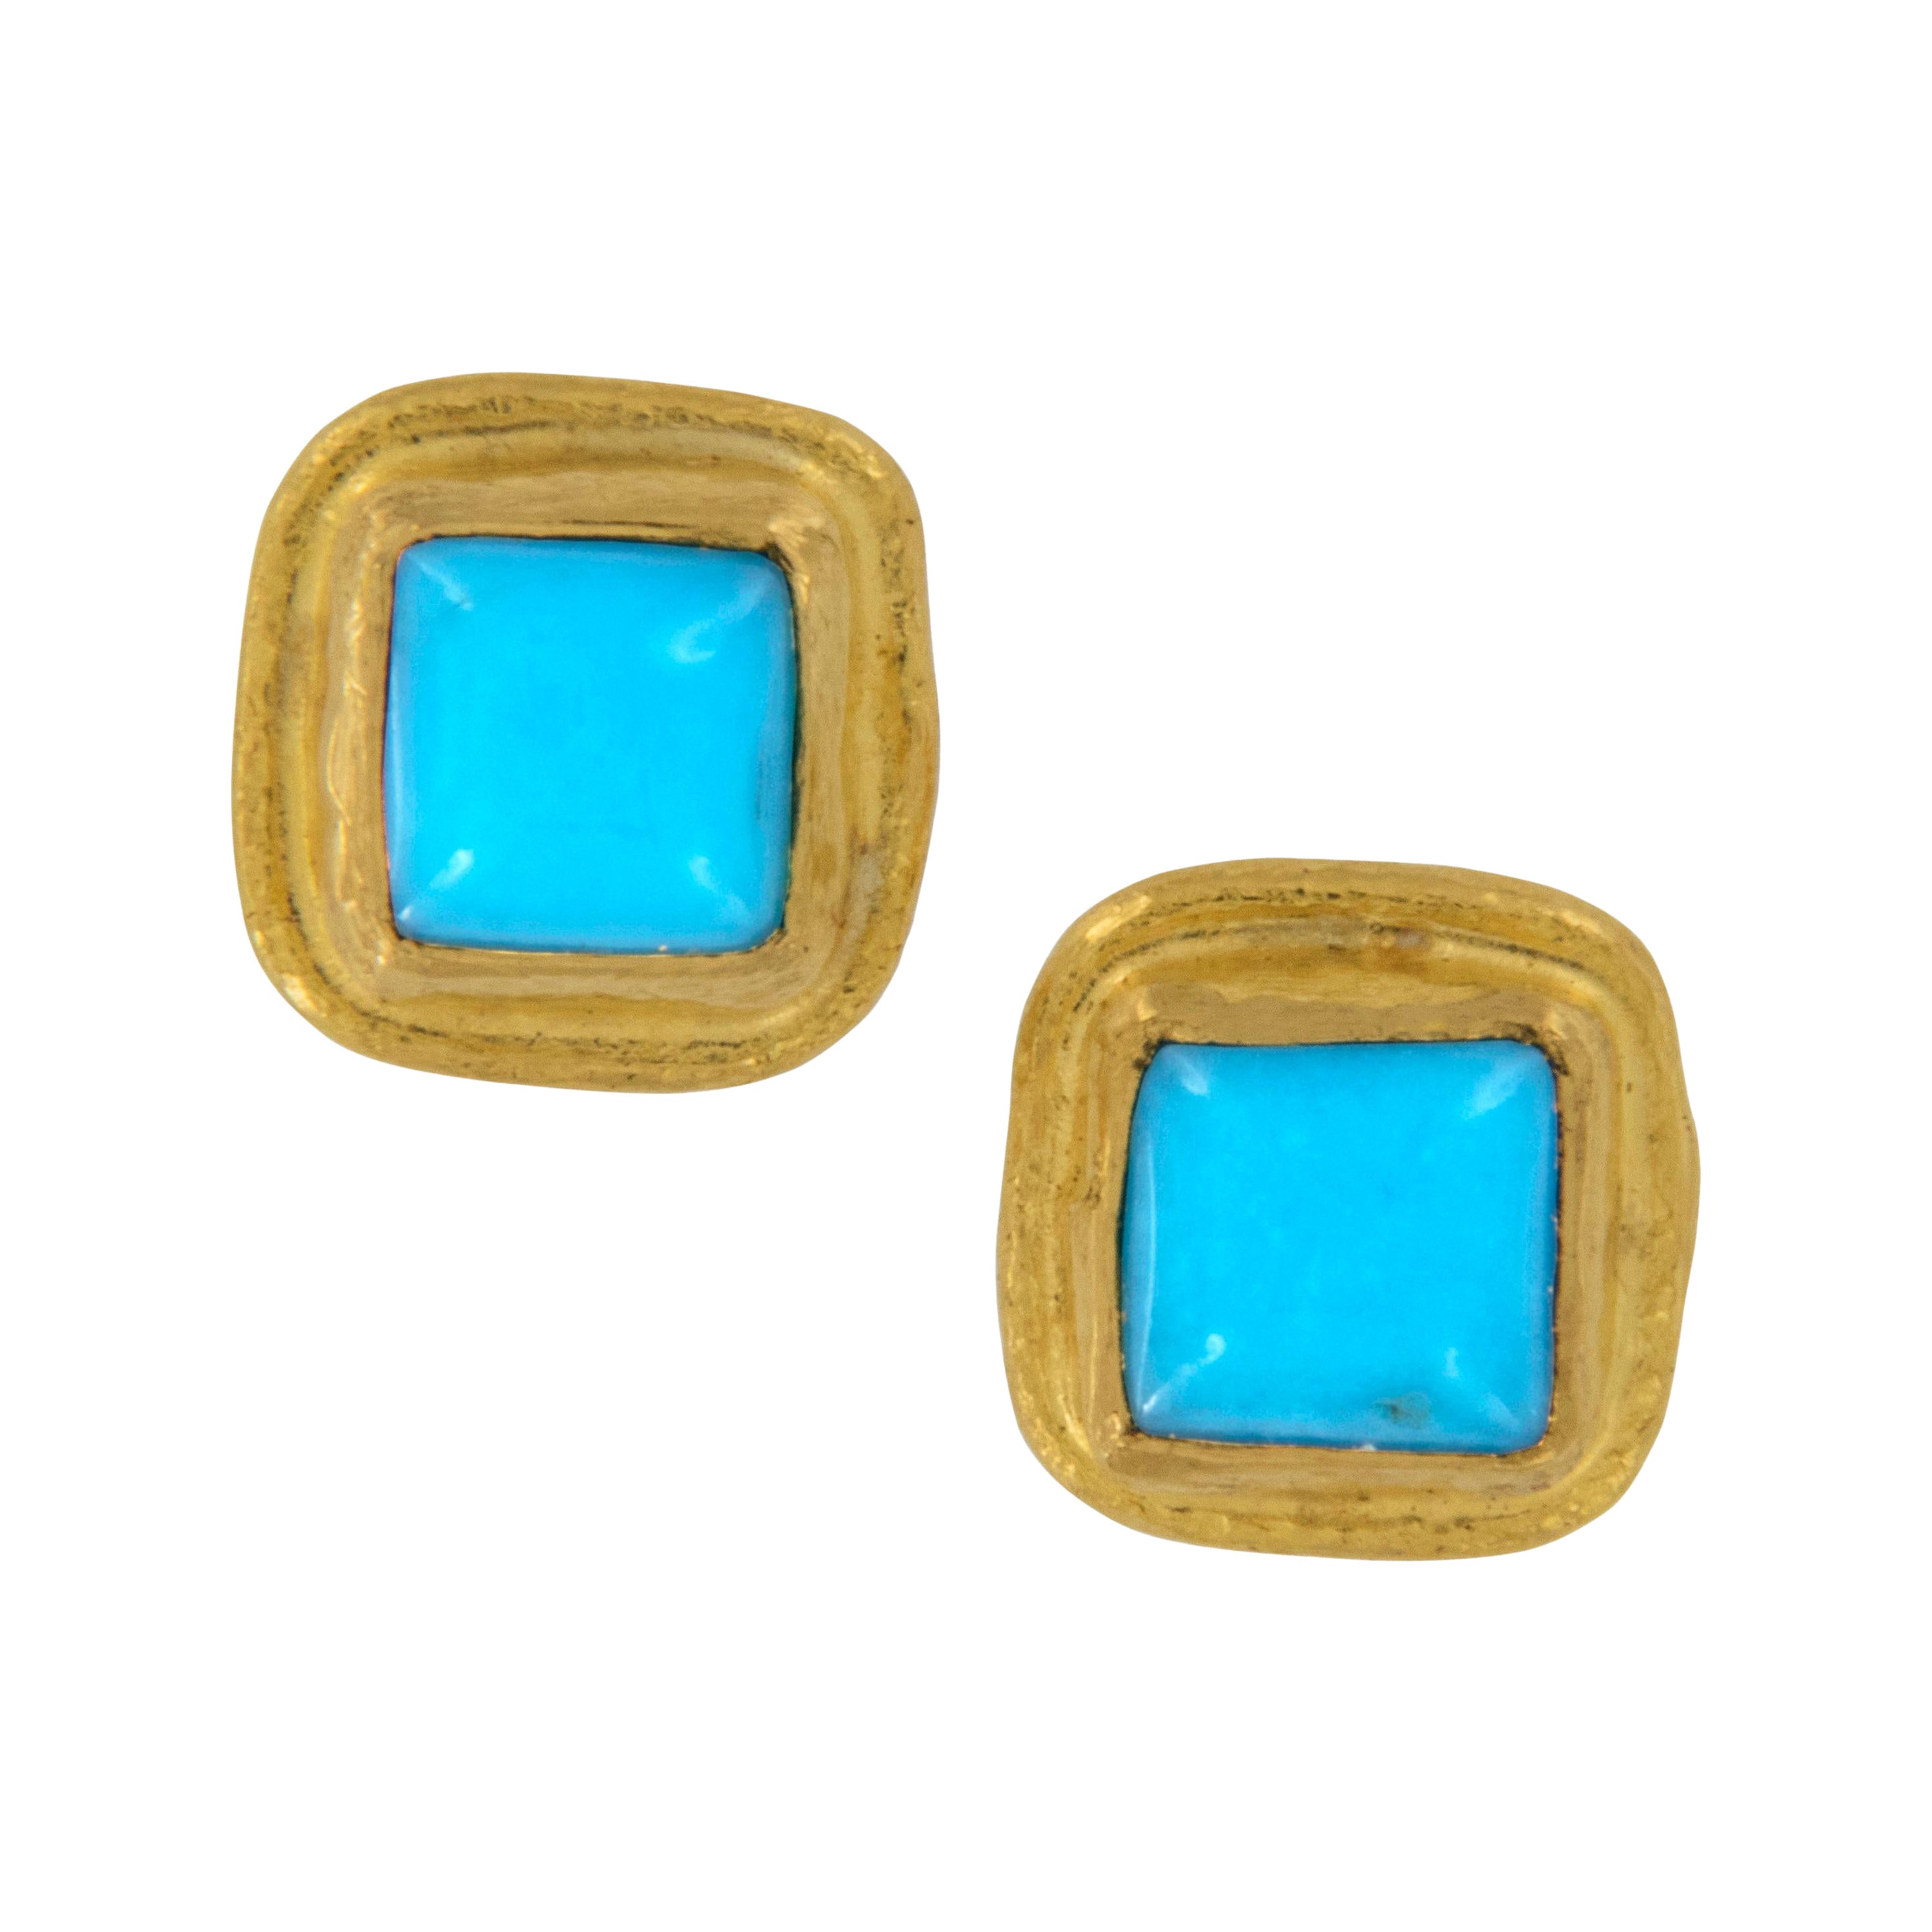 Pure 24 Karat Yellow Gold Persian Turquoise Stud Earrings